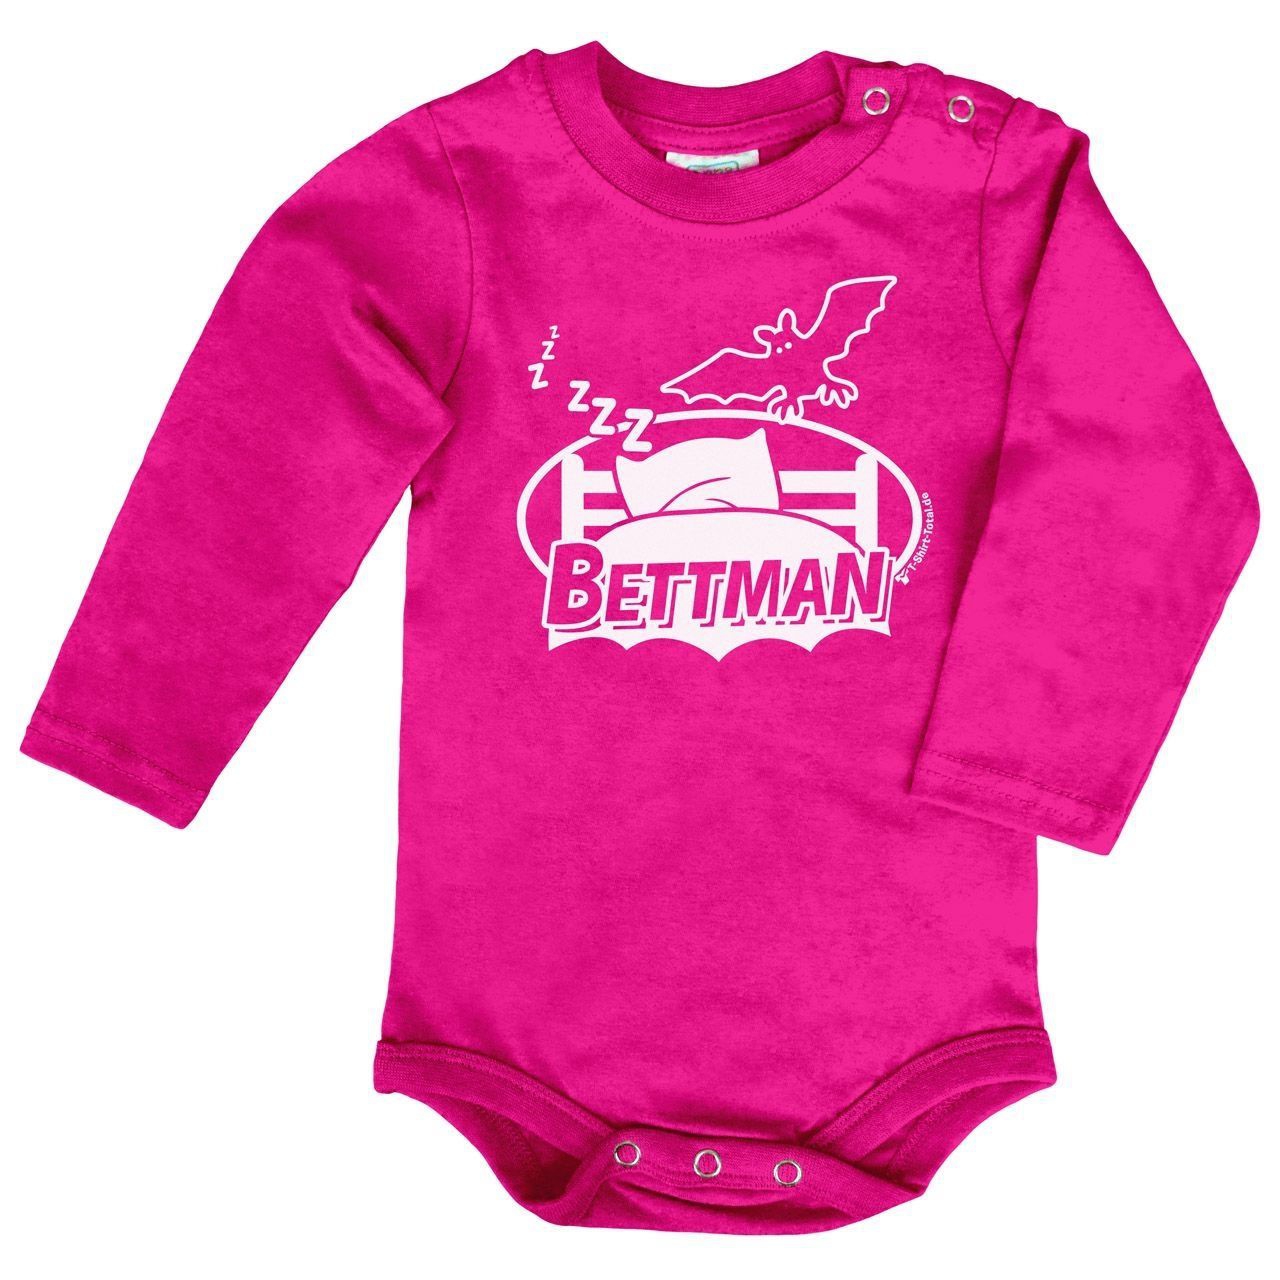 Bettman Baby Body Langarm pink 68 / 74